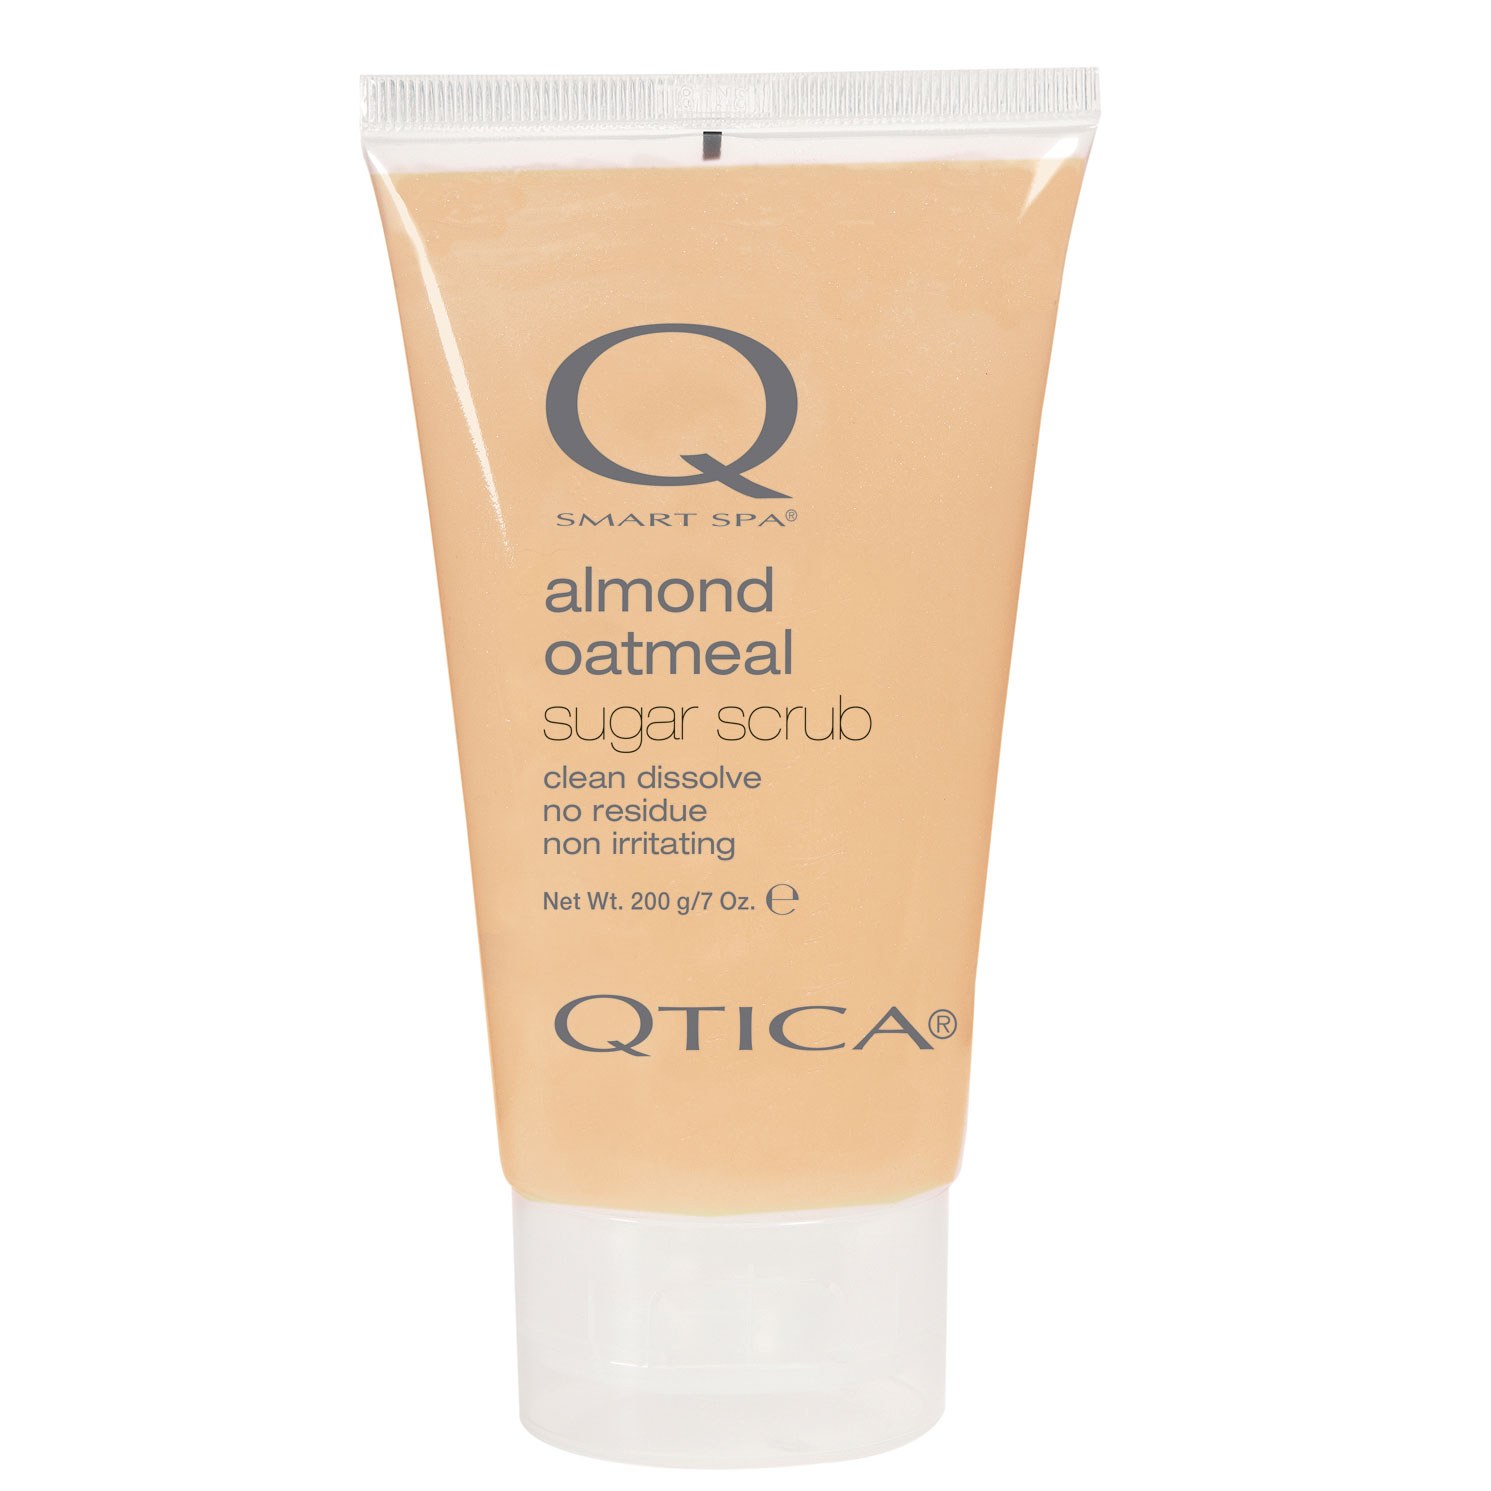 Qtica Smart Spa - Almond Oatmeal Sugar Scrub 7oz